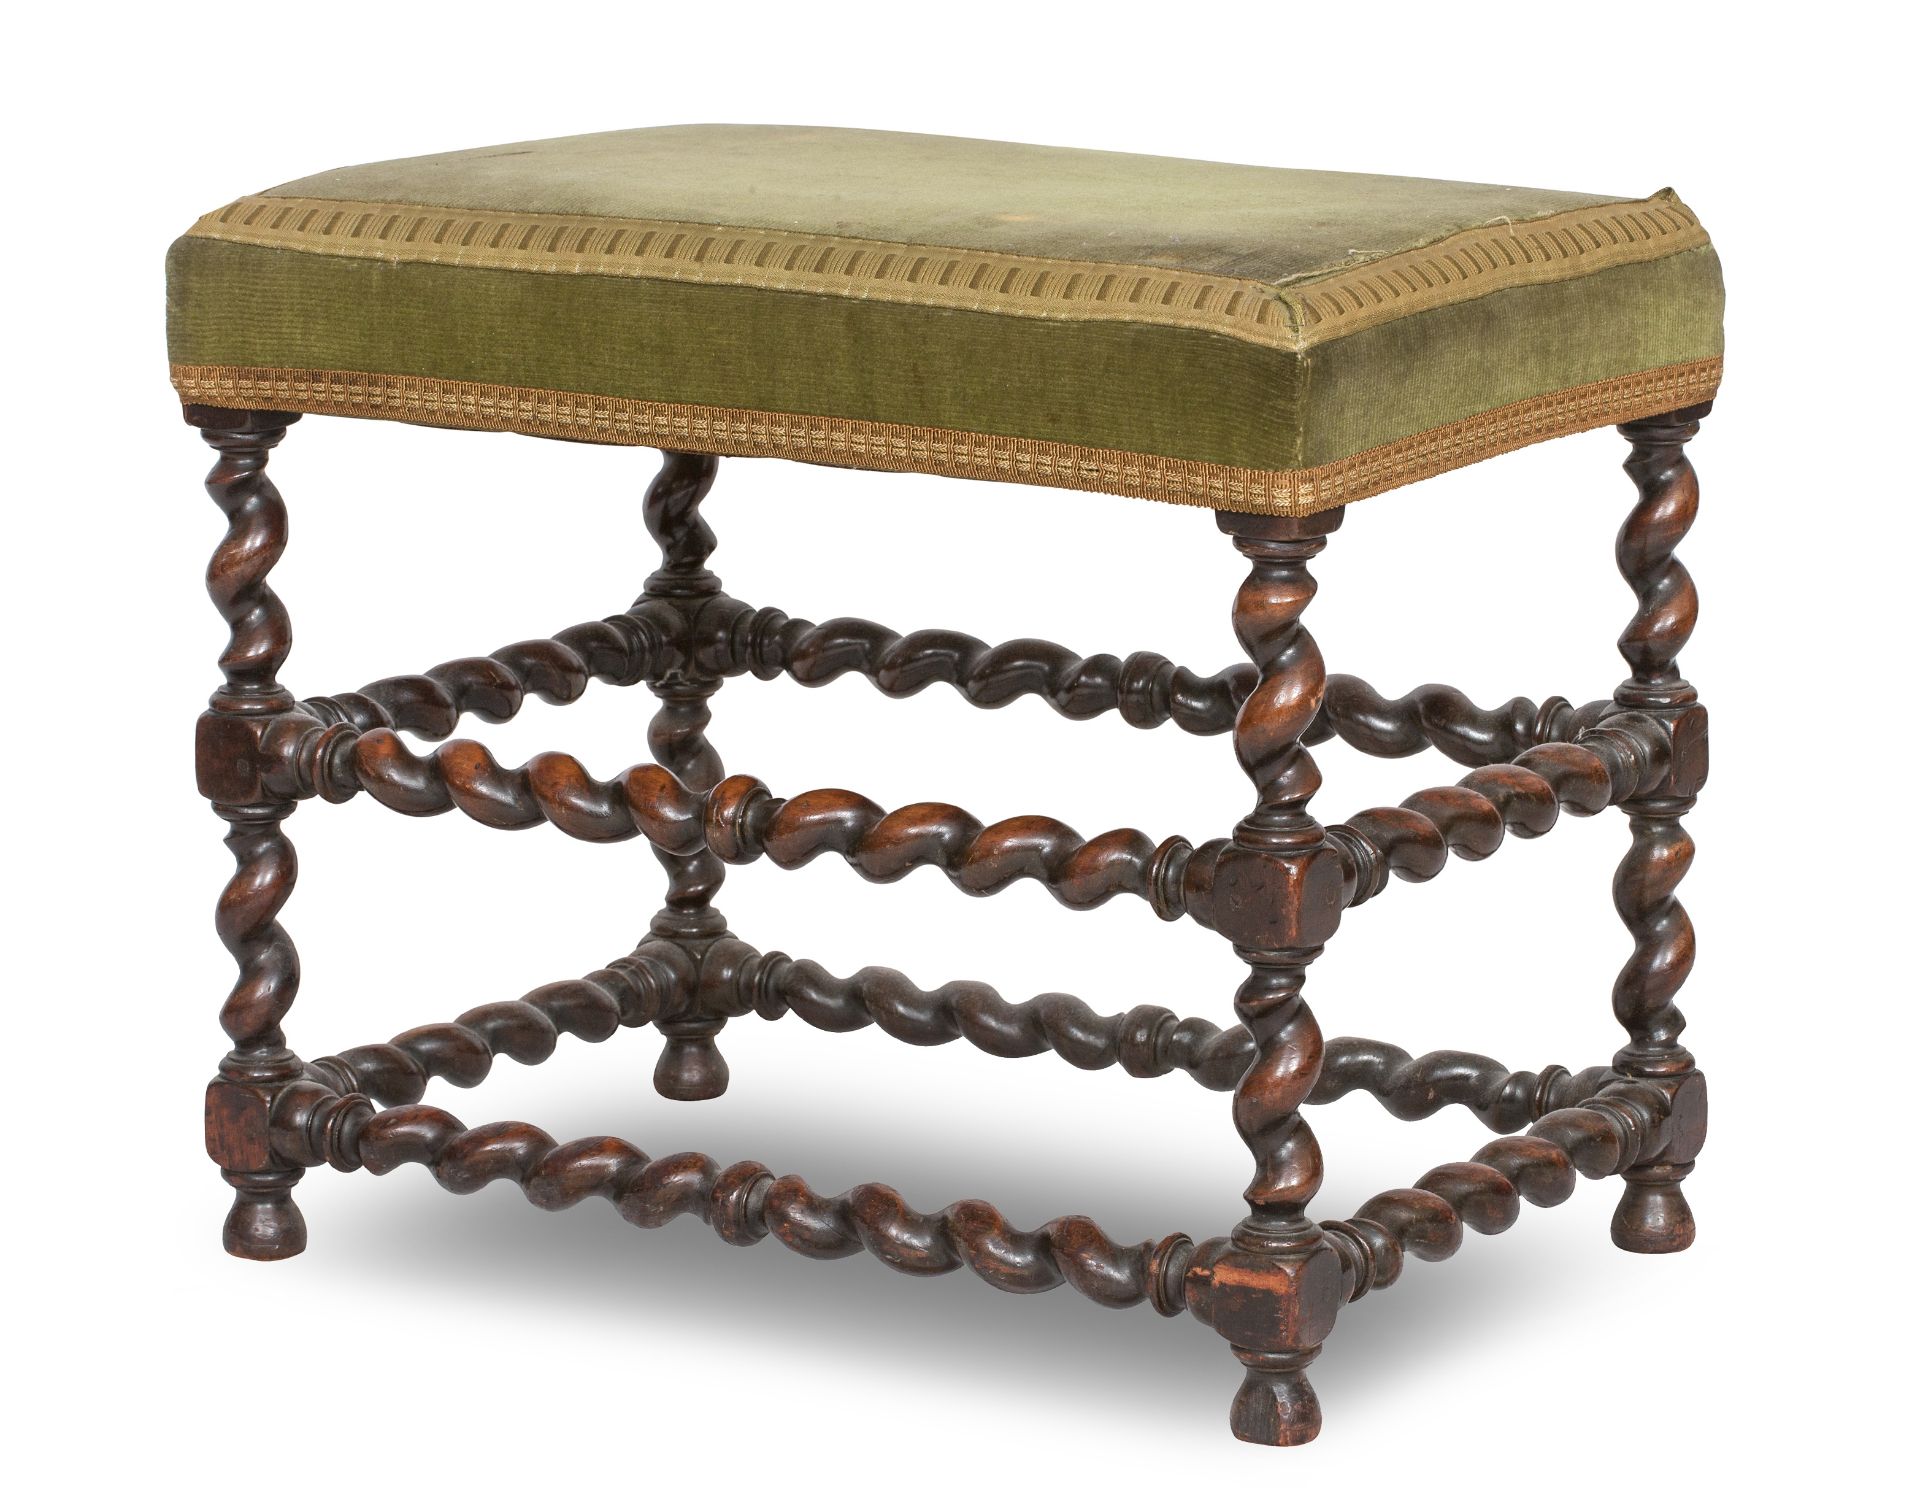 An 18th century walnut stool